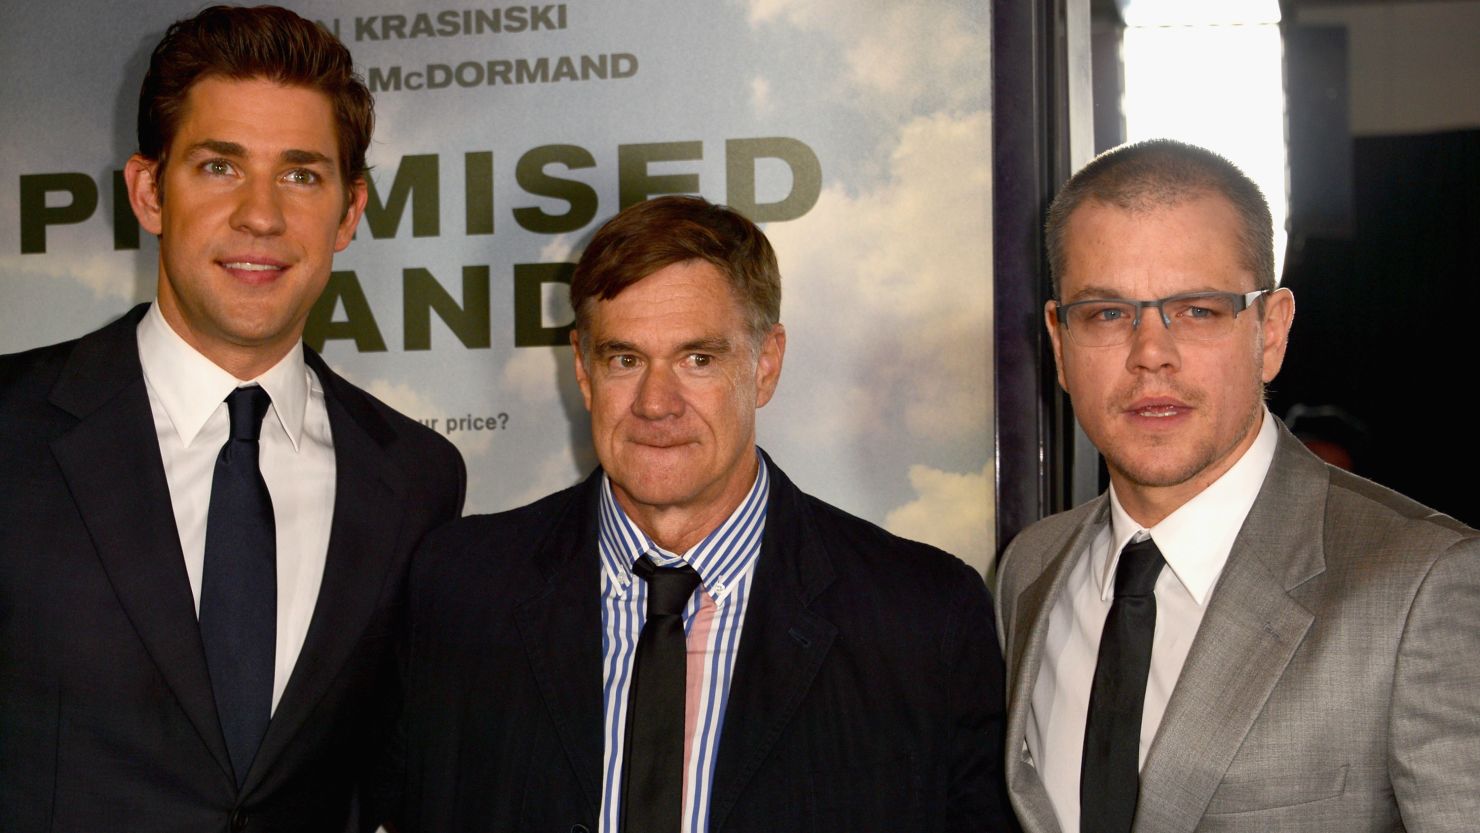 From left, John Krasinski, Gus Van Sant and Matt Damon promote what Sheril Kirshenbaum says will be a controversial film.